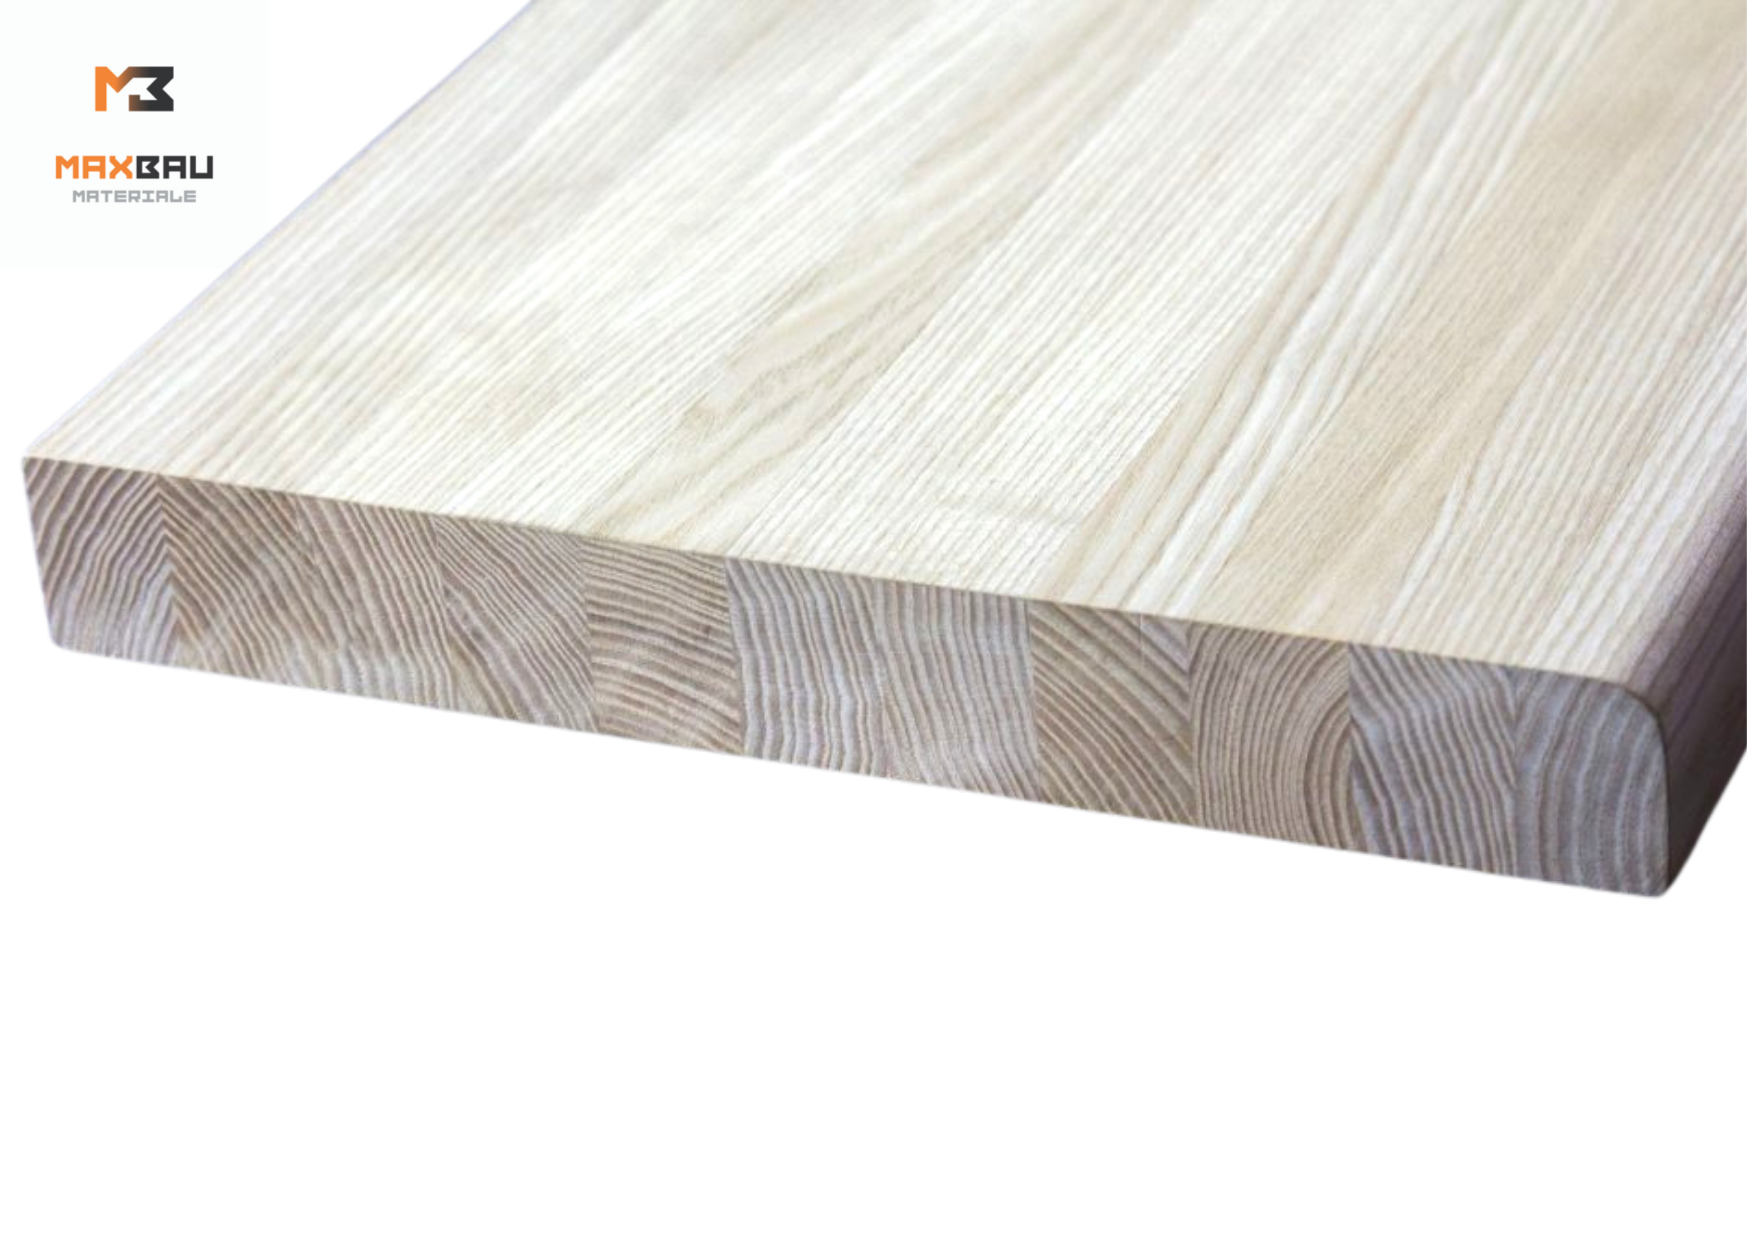 Placi din lemn incleiat - Placa de lemn incleiat MaxBau 2000 x 300 x 28 mm Clasa AB, maxbau.ro